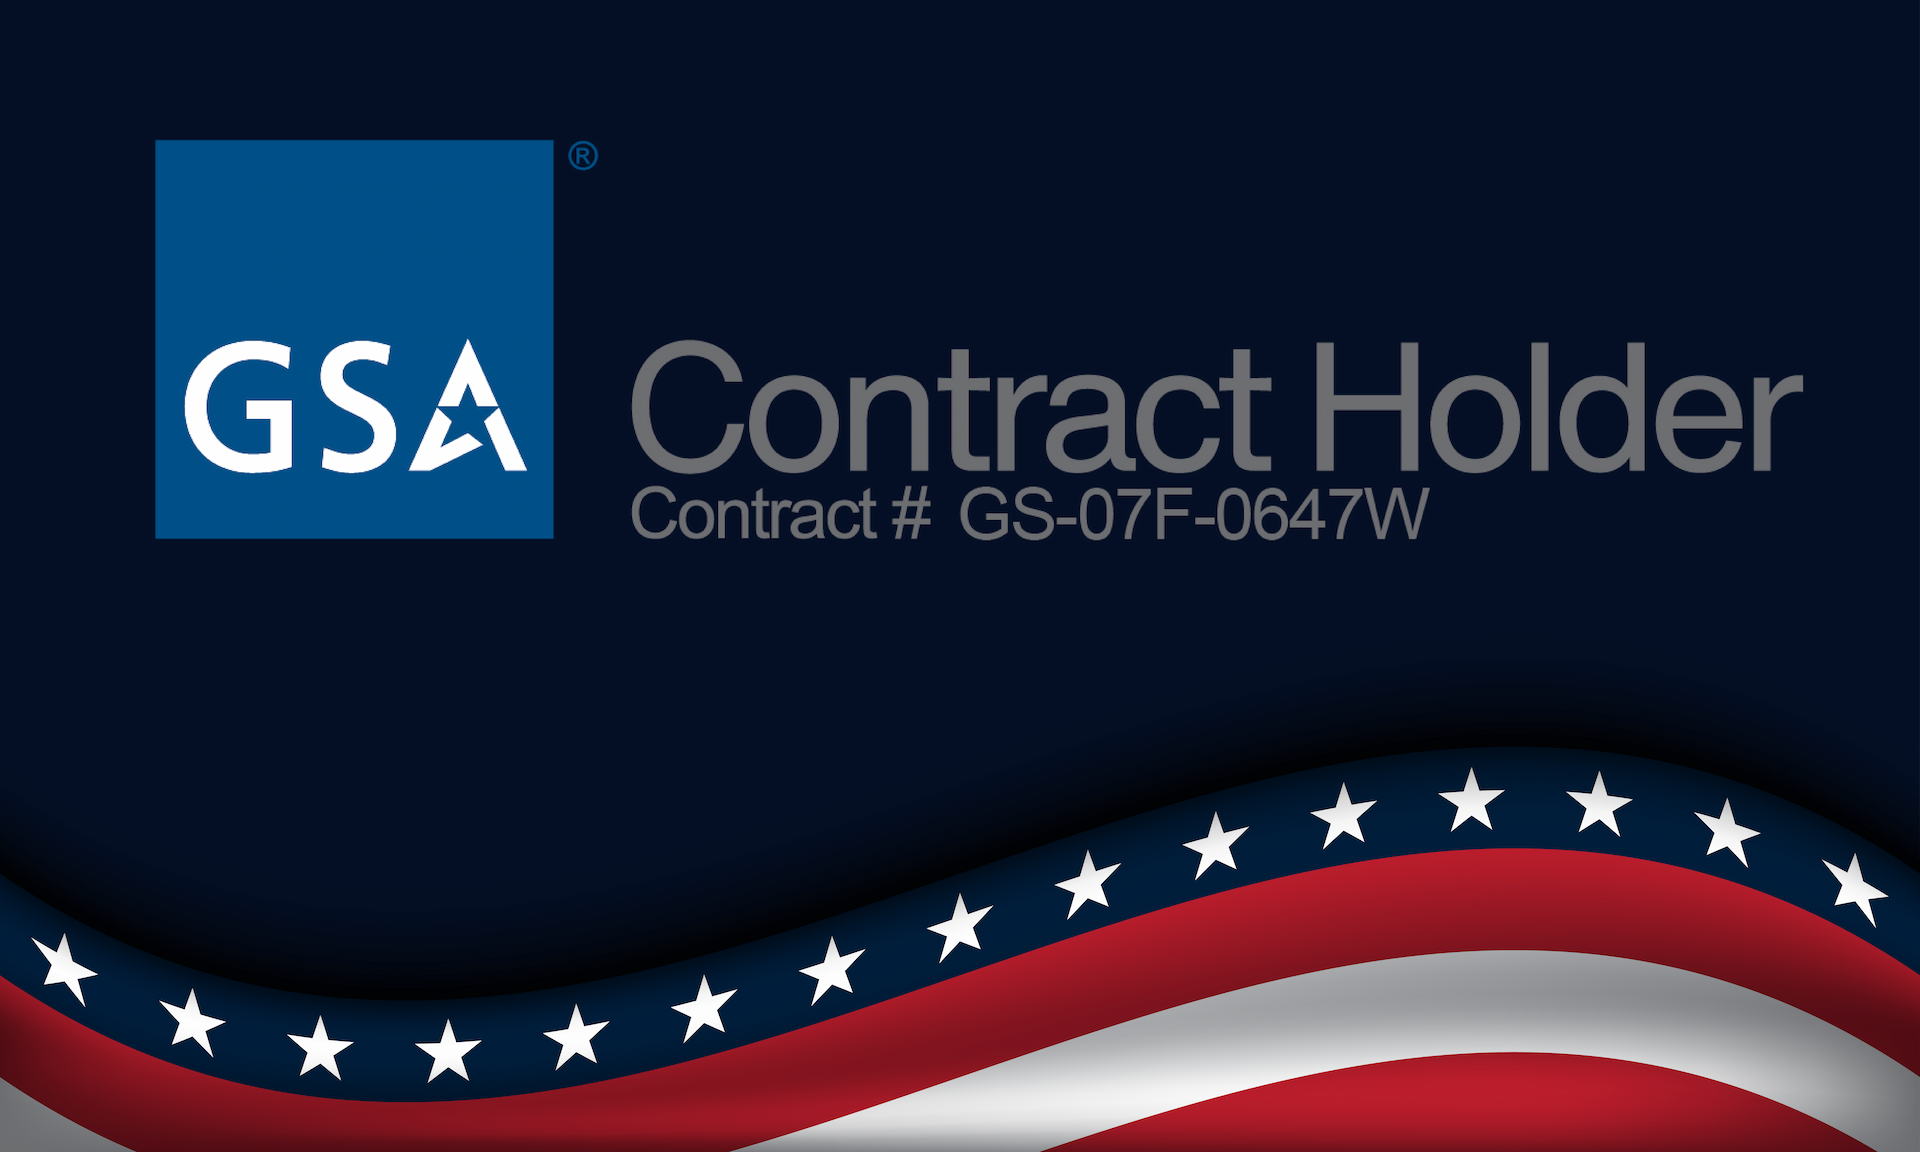 gsa contract holder image2